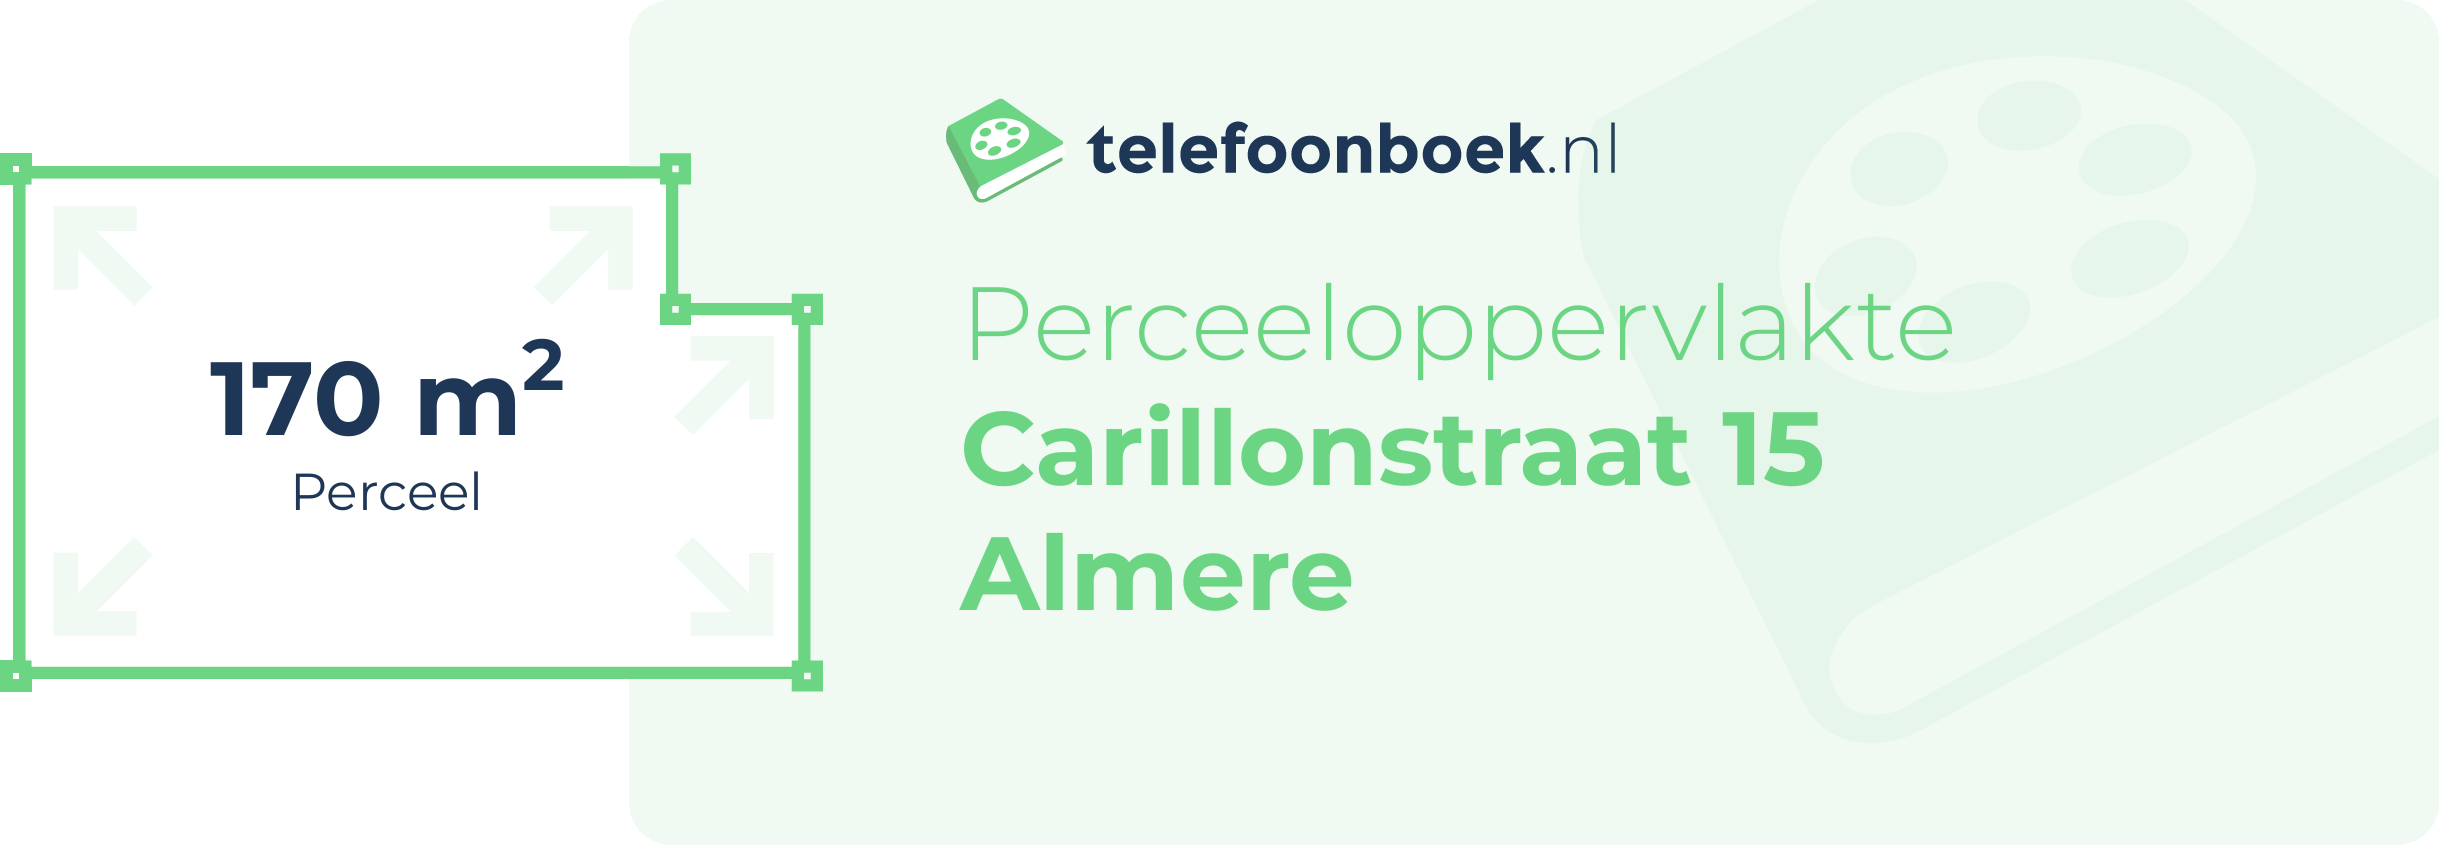 Perceeloppervlakte Carillonstraat 15 Almere